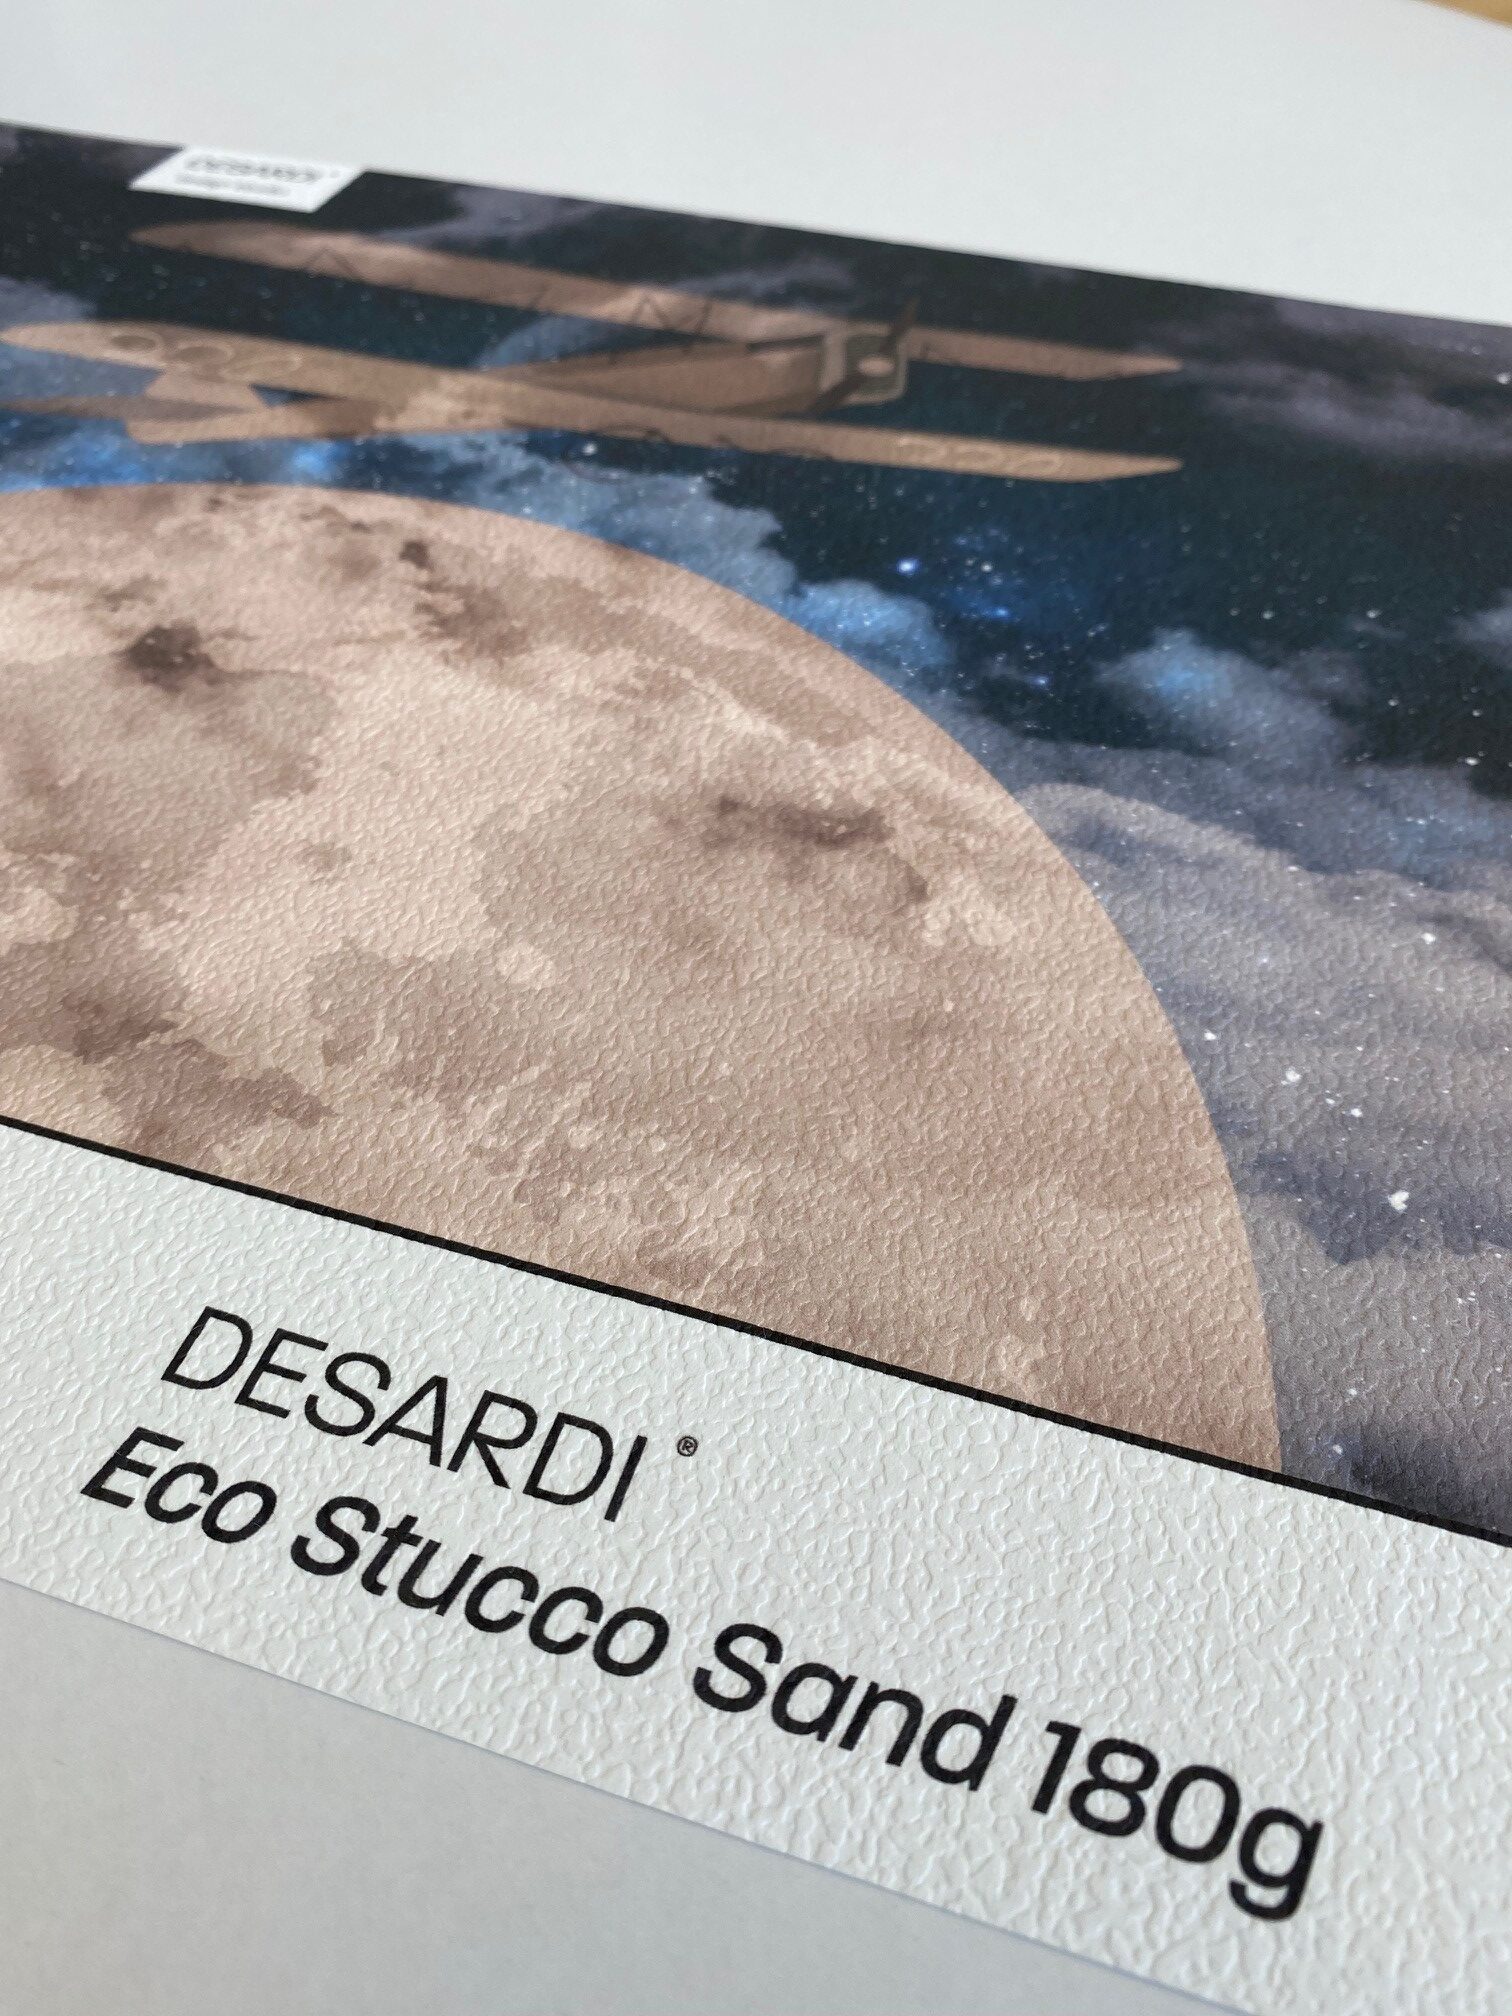 DESARDI® Eco Stucco Sand 180g - DESARDI ® | Digital Wallcovering